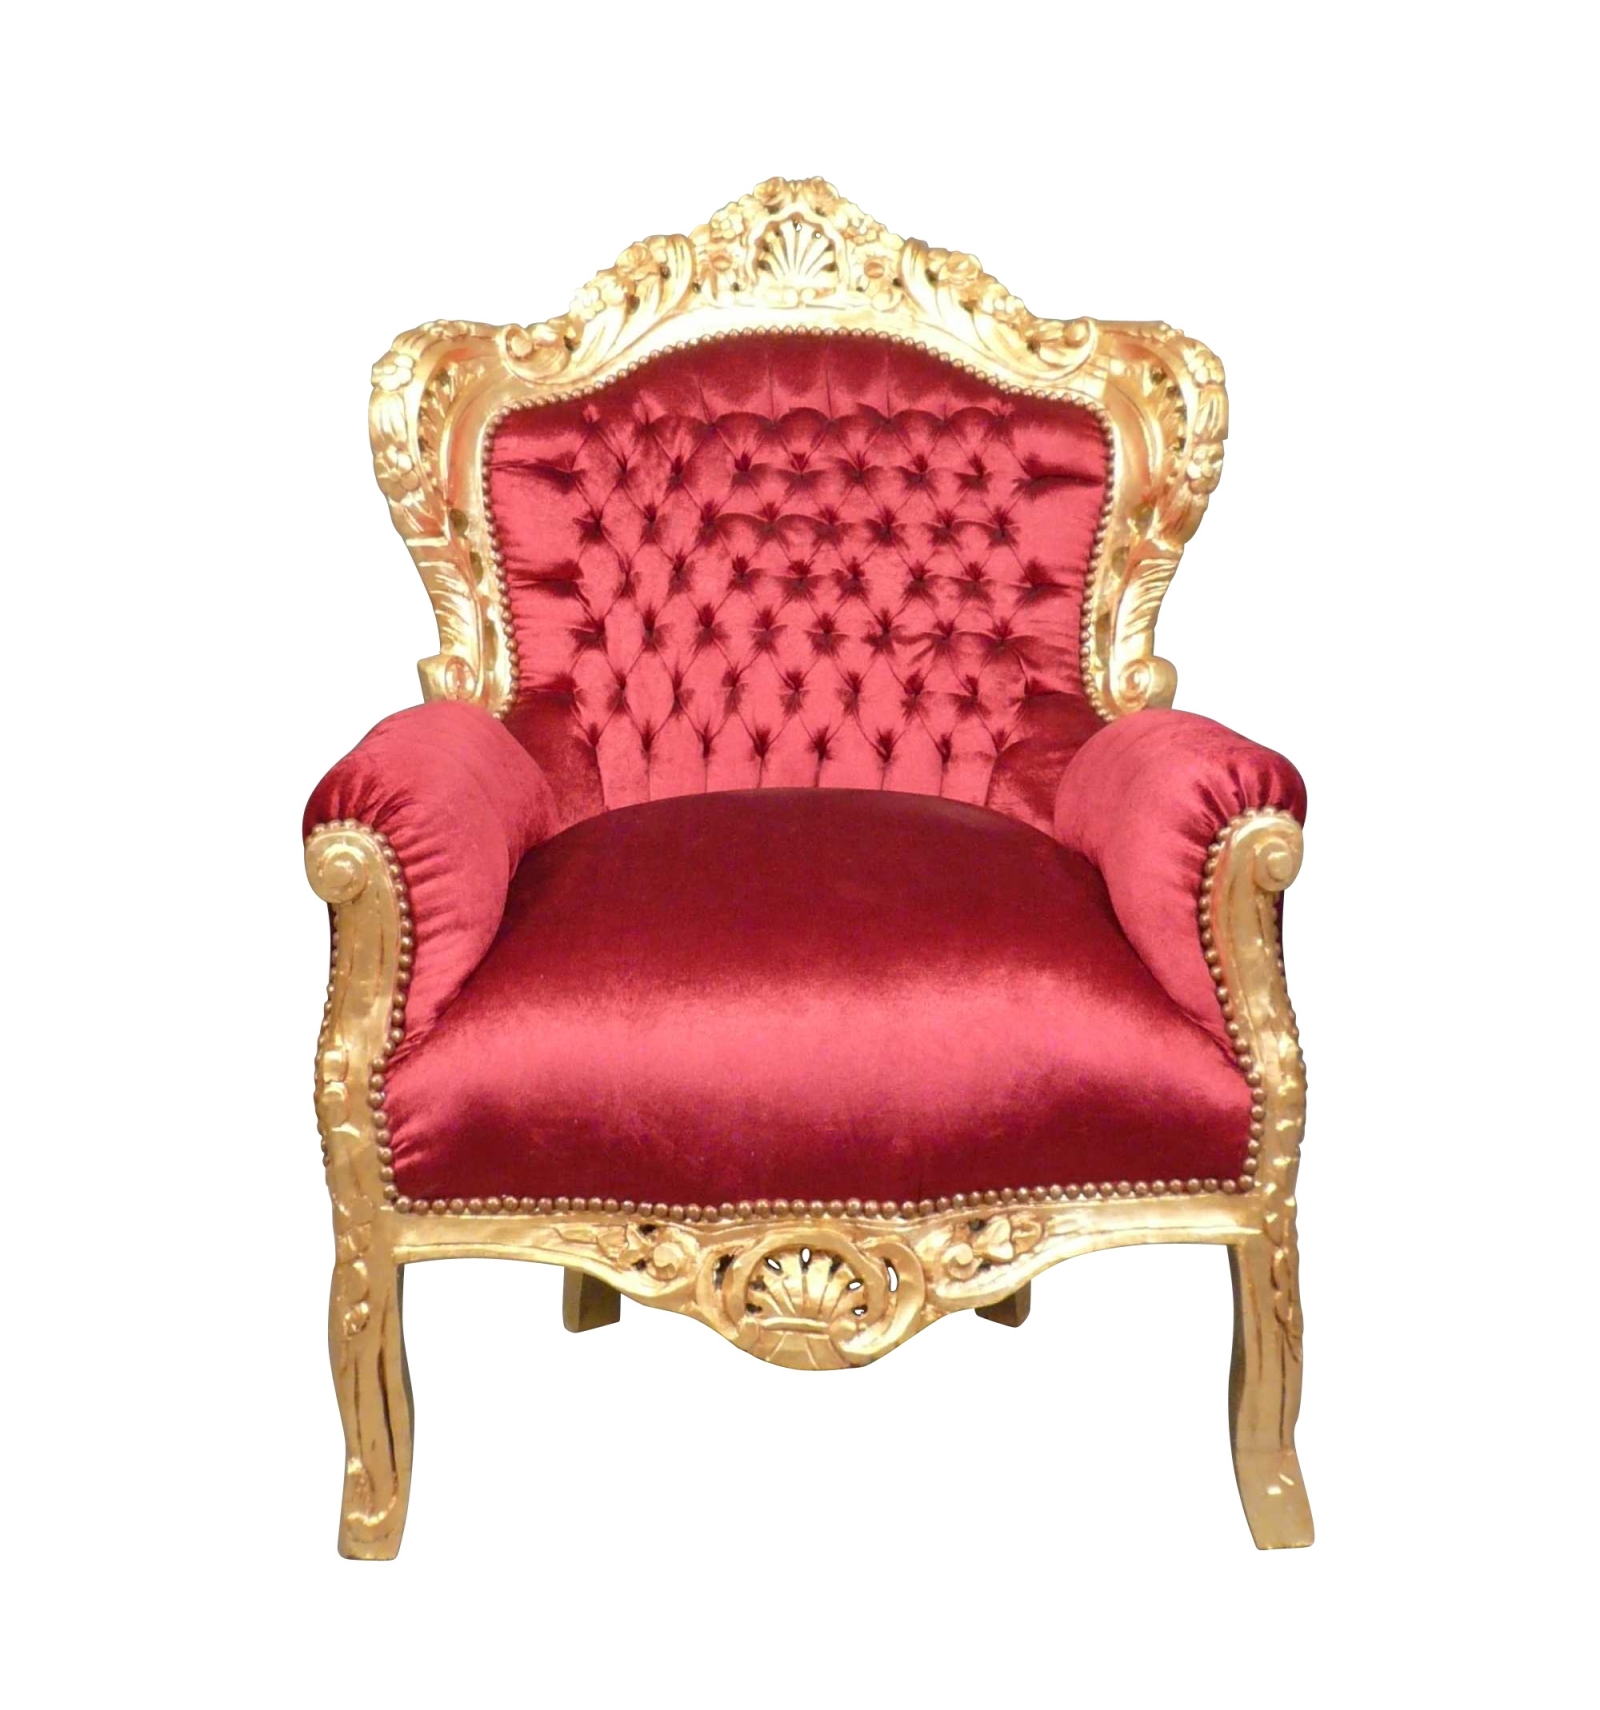 Vertrappen hek Aanpassing Barok fauteuil Rode Amsterdam - Barok meubels